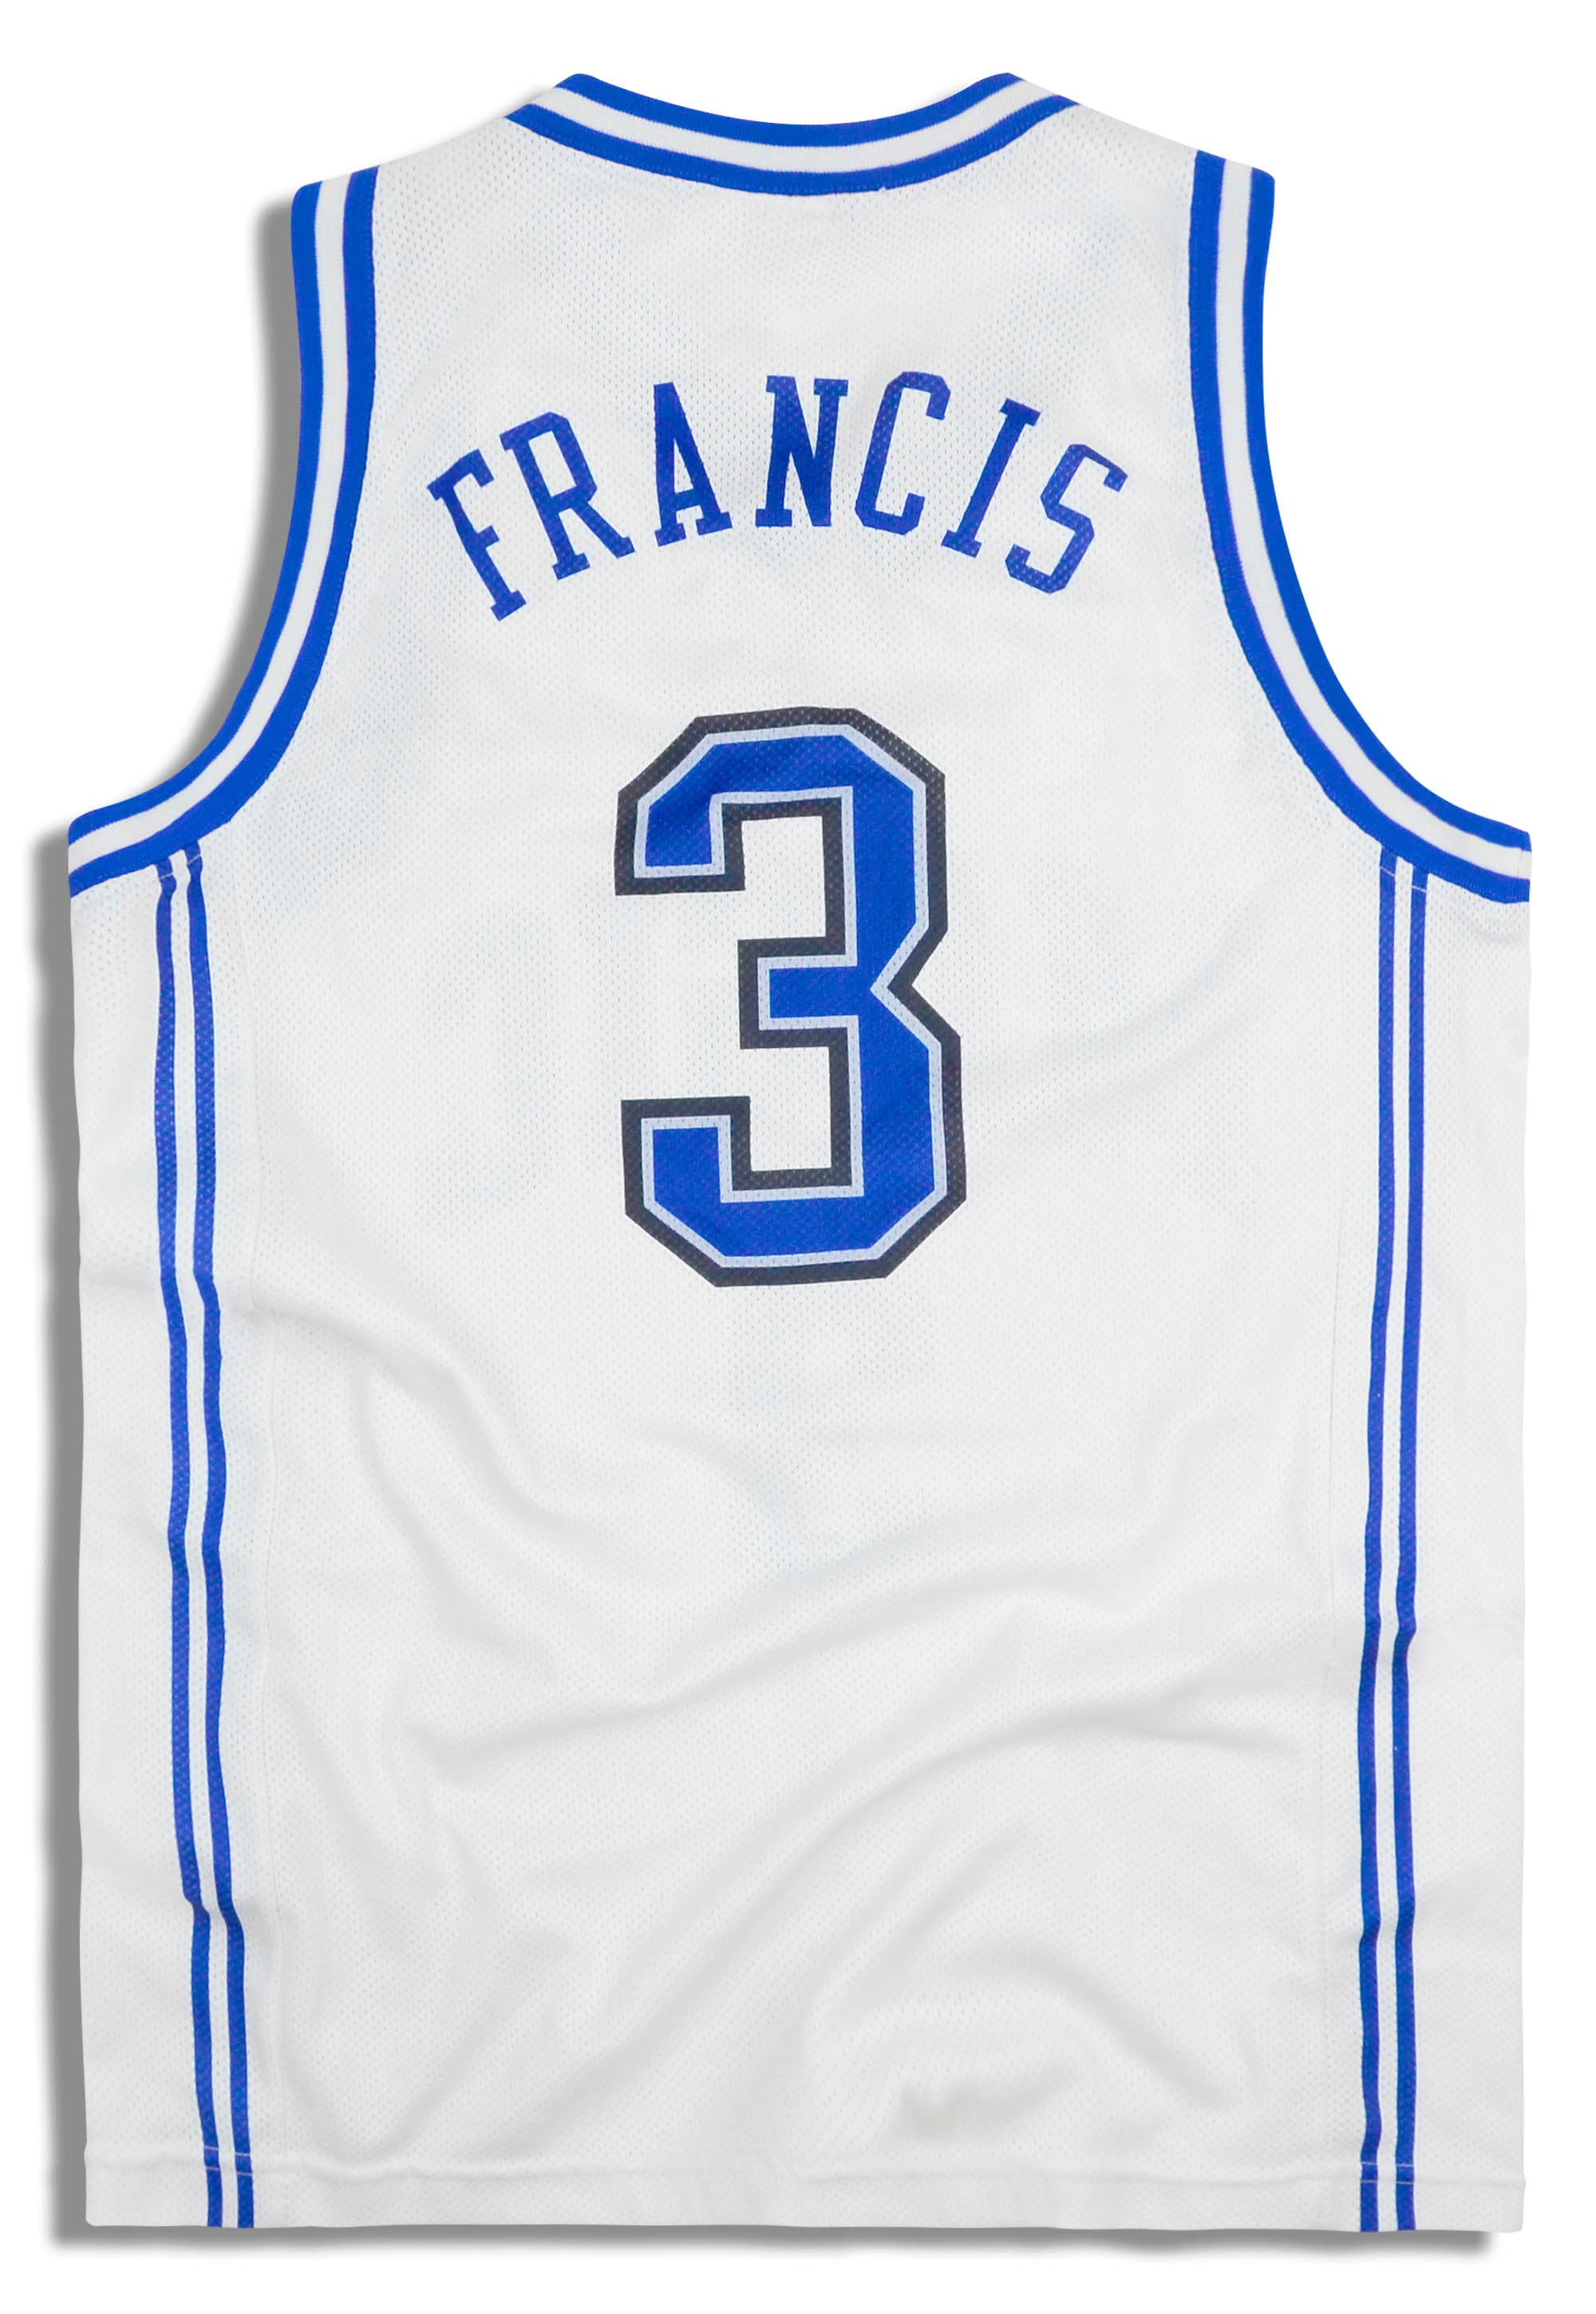 Vintage Houston Rockets Steve Francis #3 Nike Team Basketball